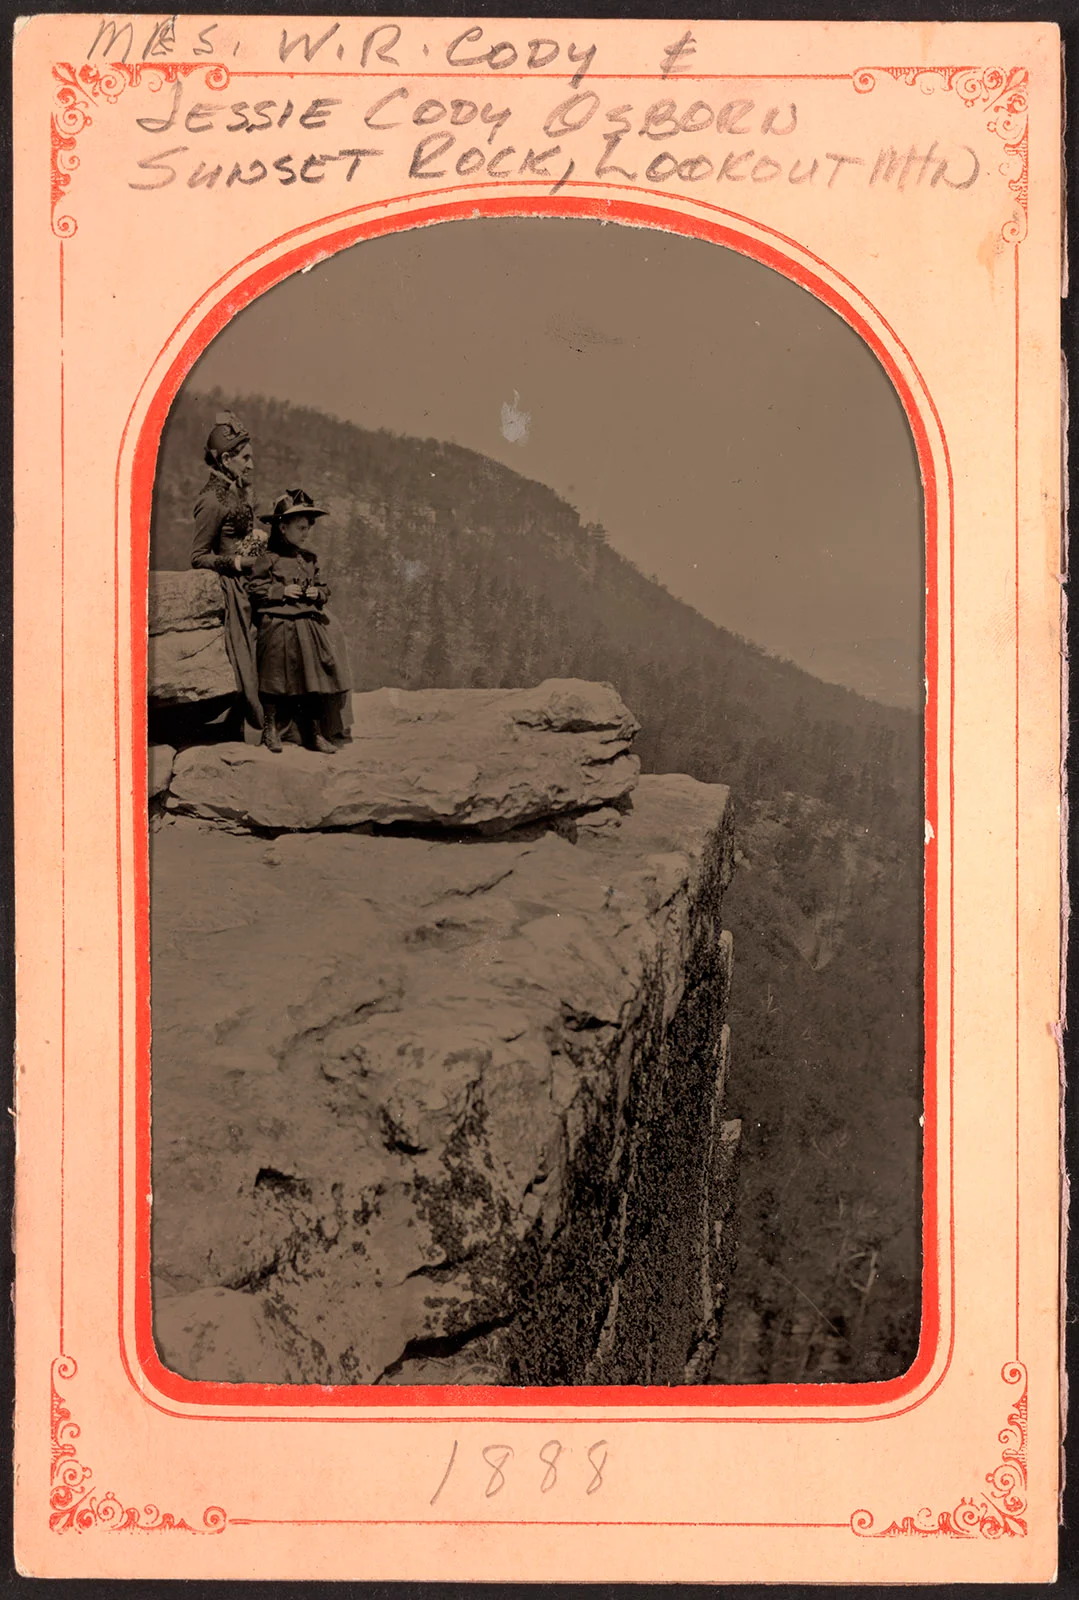 lookout mountain tintype